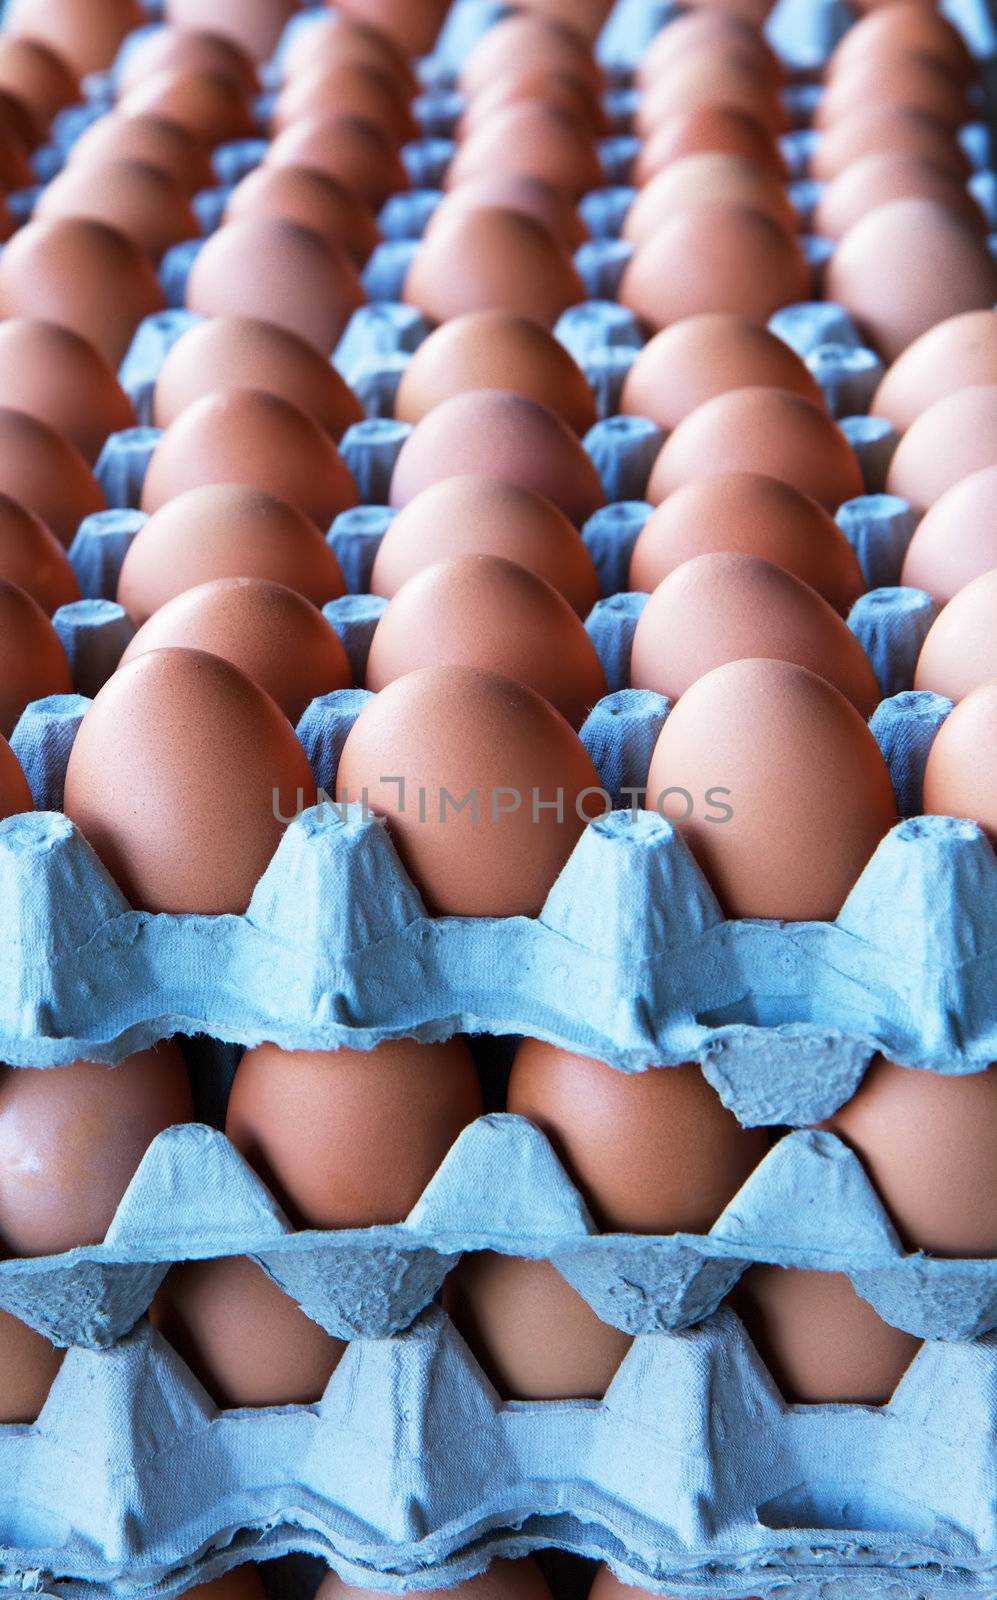 Piles eggs by bobkeenan